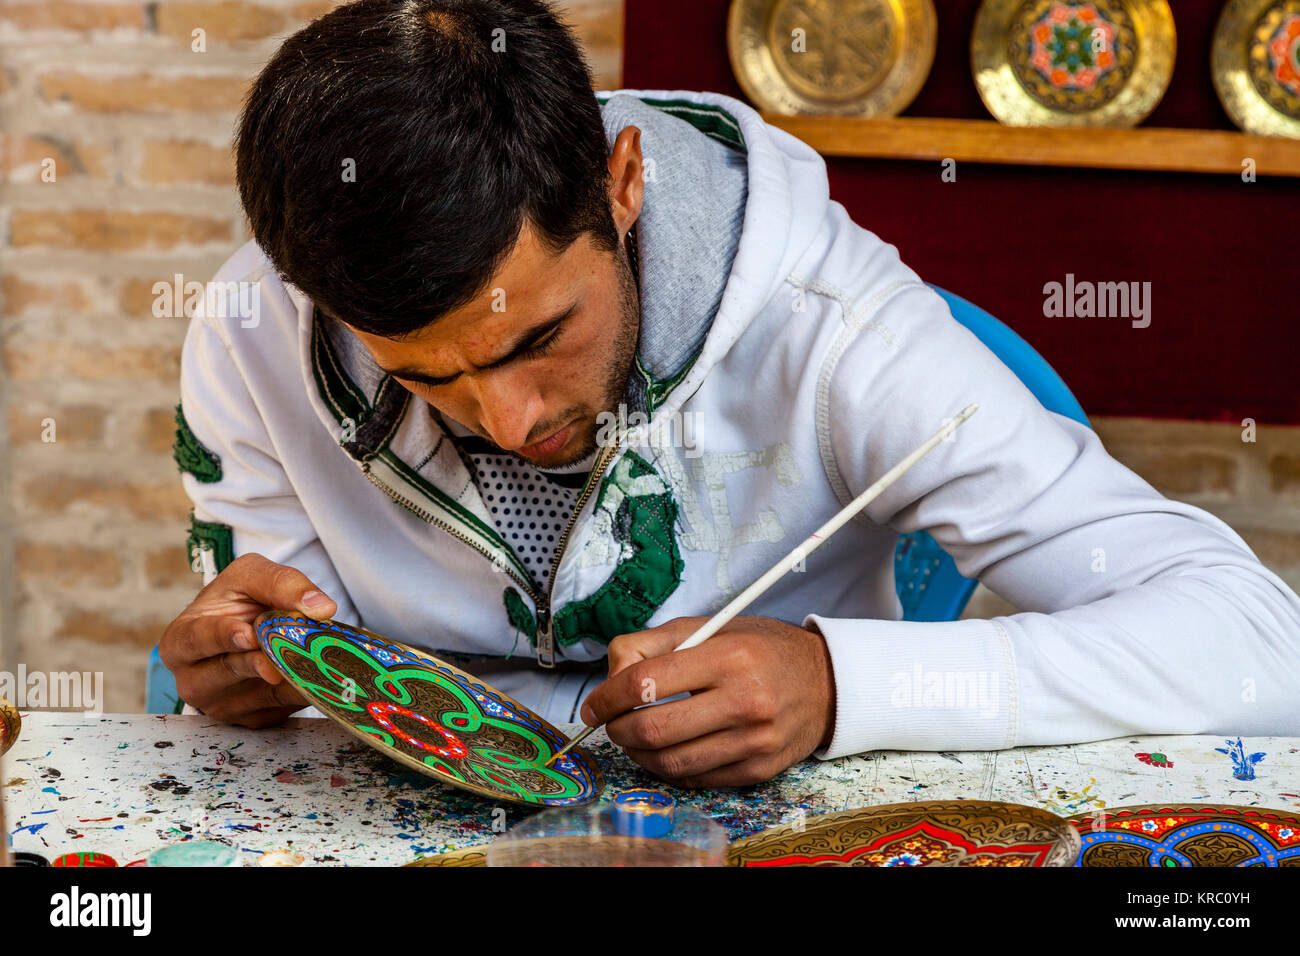 An Artist/Craftsman Working in The Market, Bukhara, Uzbekistan Stock Photo